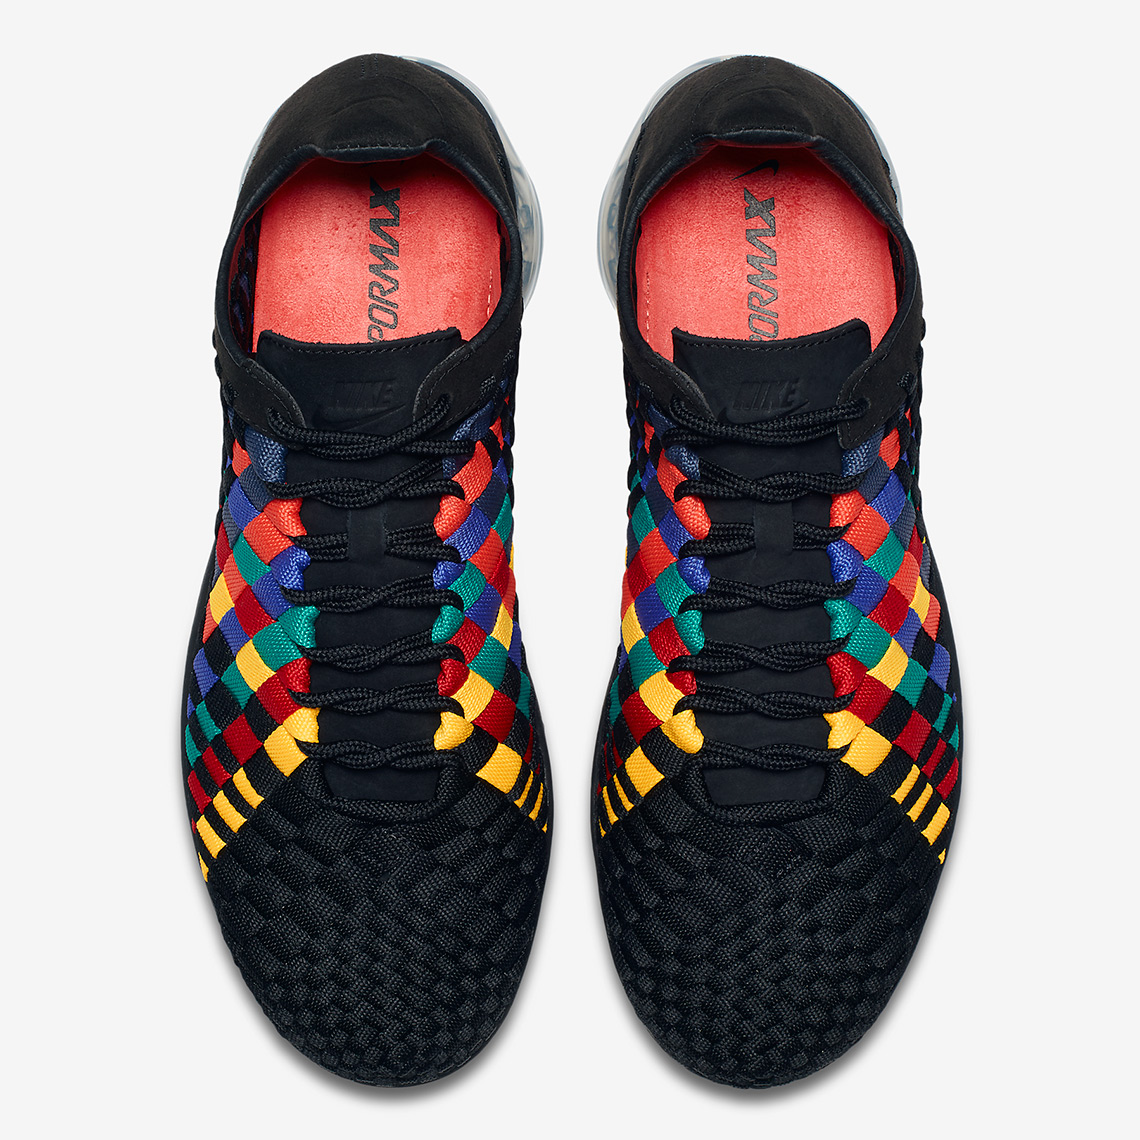 Nike Vapormax "Rainbow" AO2447-001 Release Date | SneakerNews.com